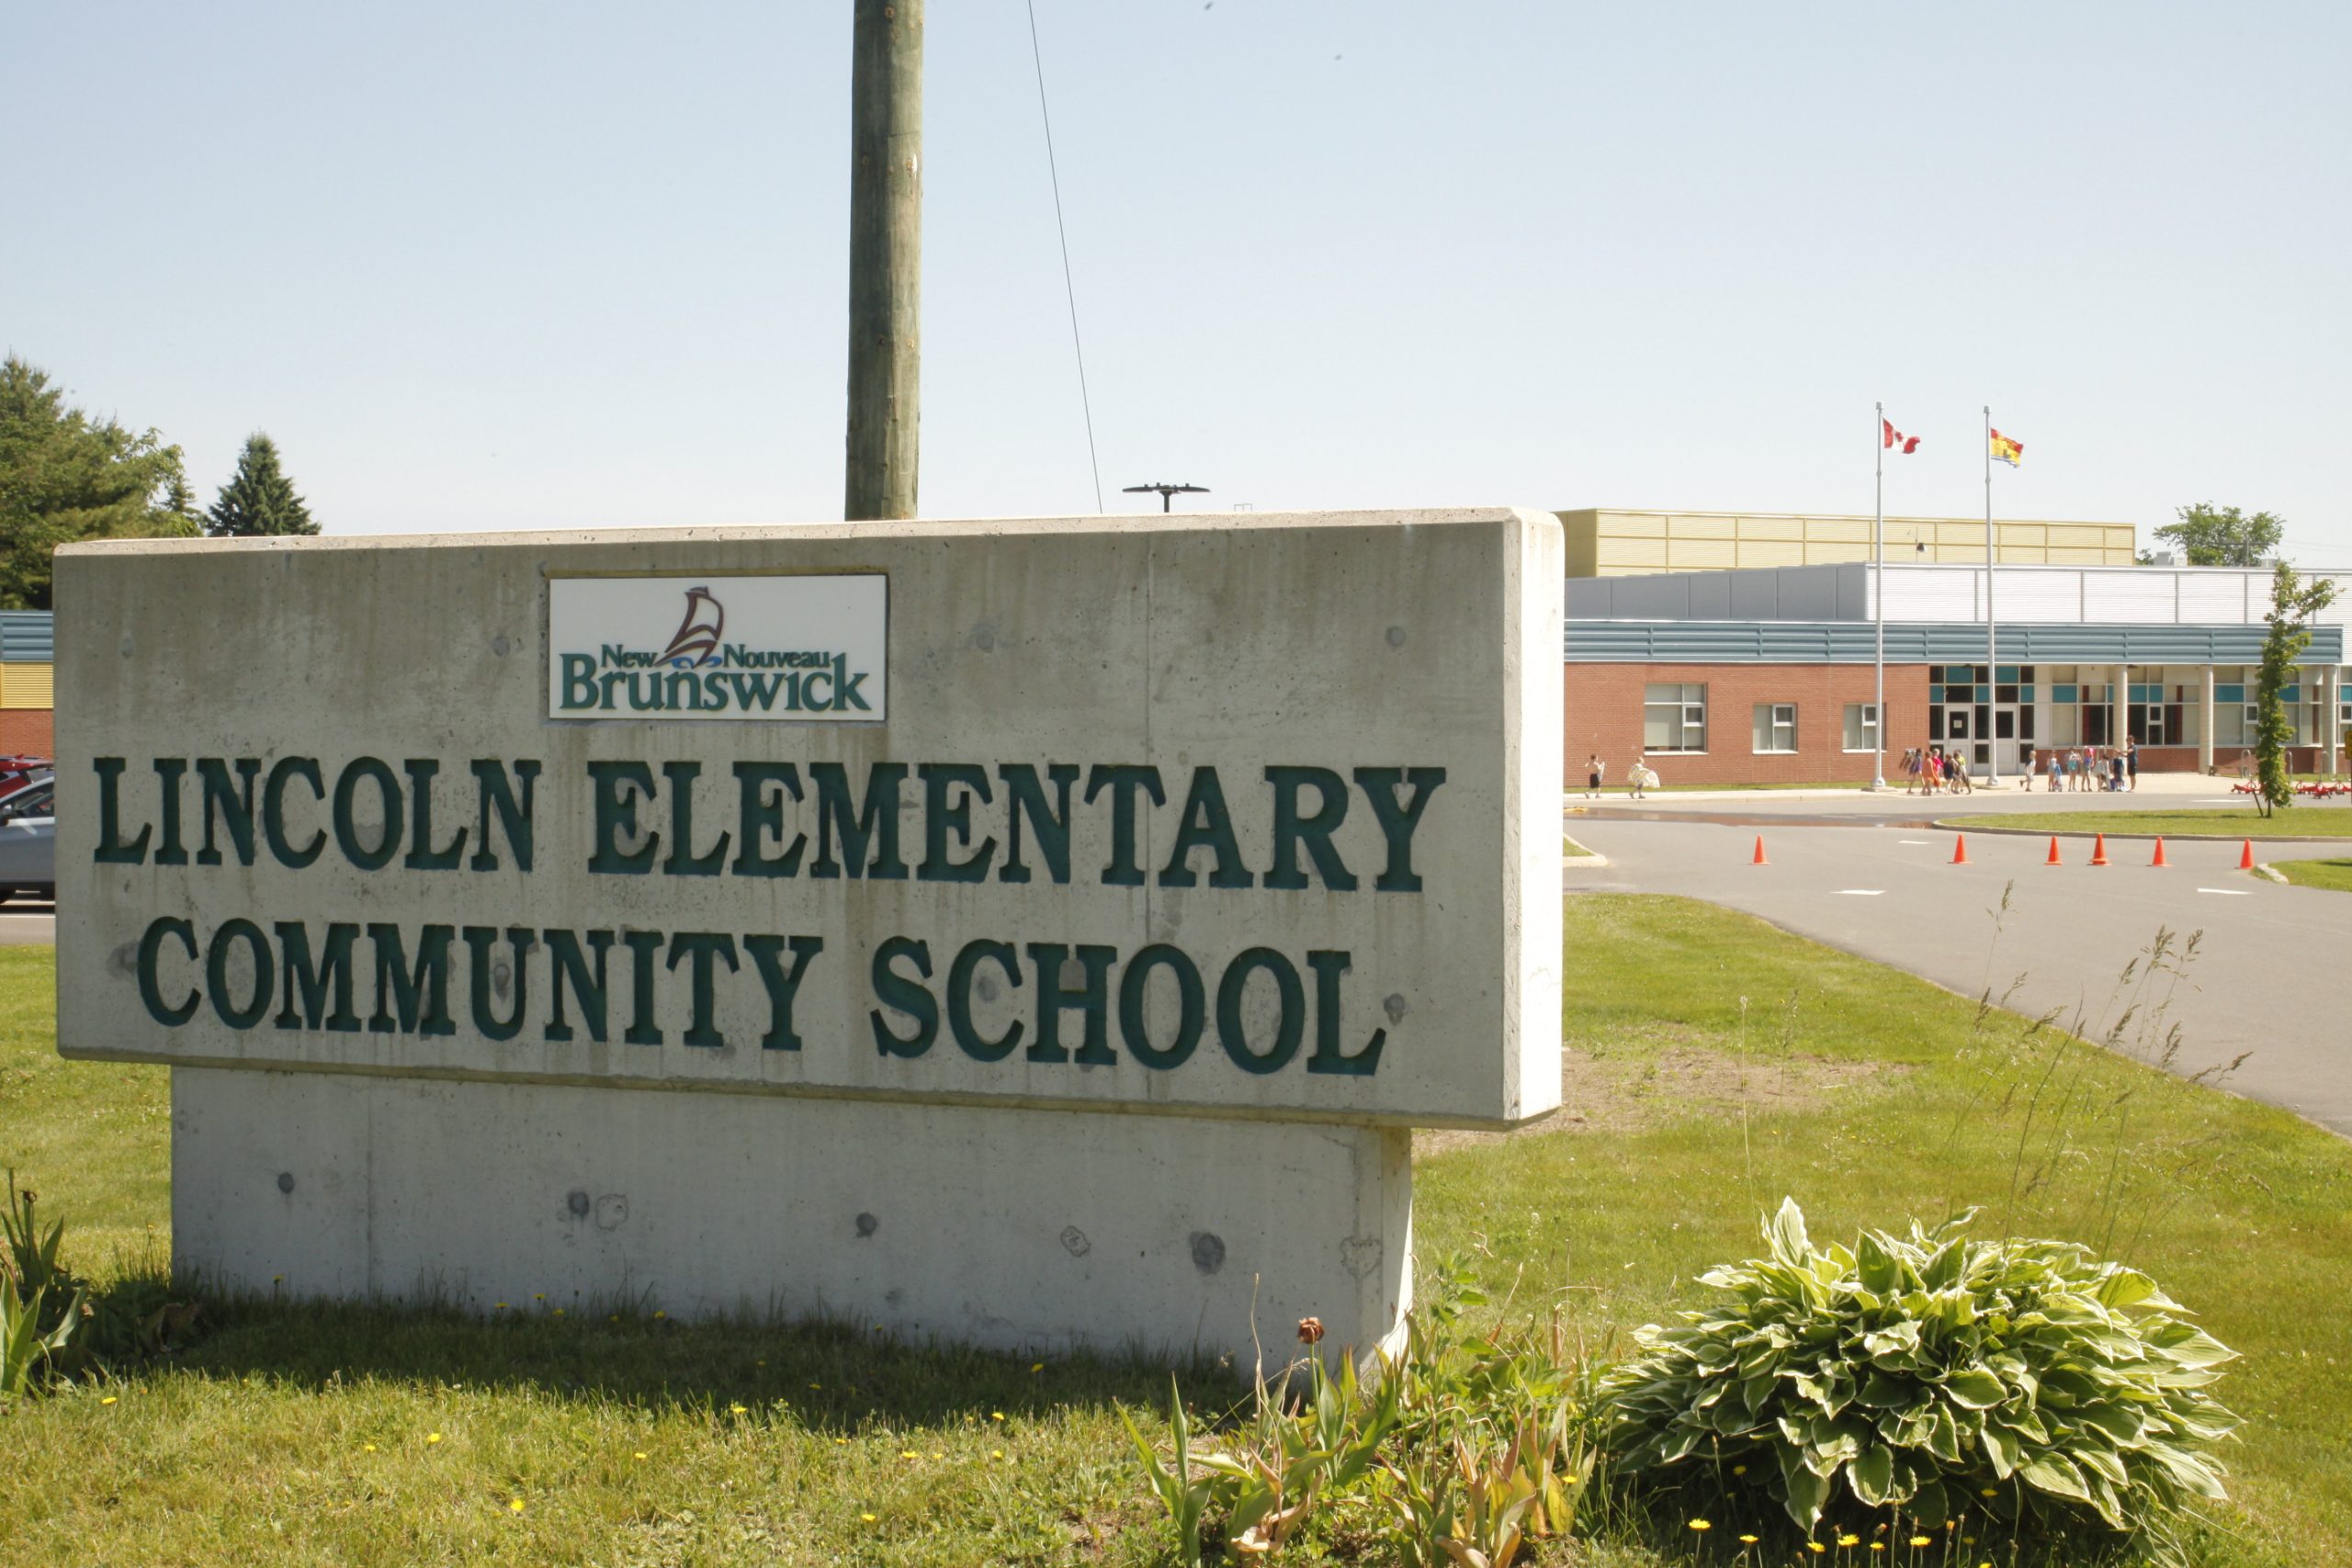 Lincoln Elementary Community School.